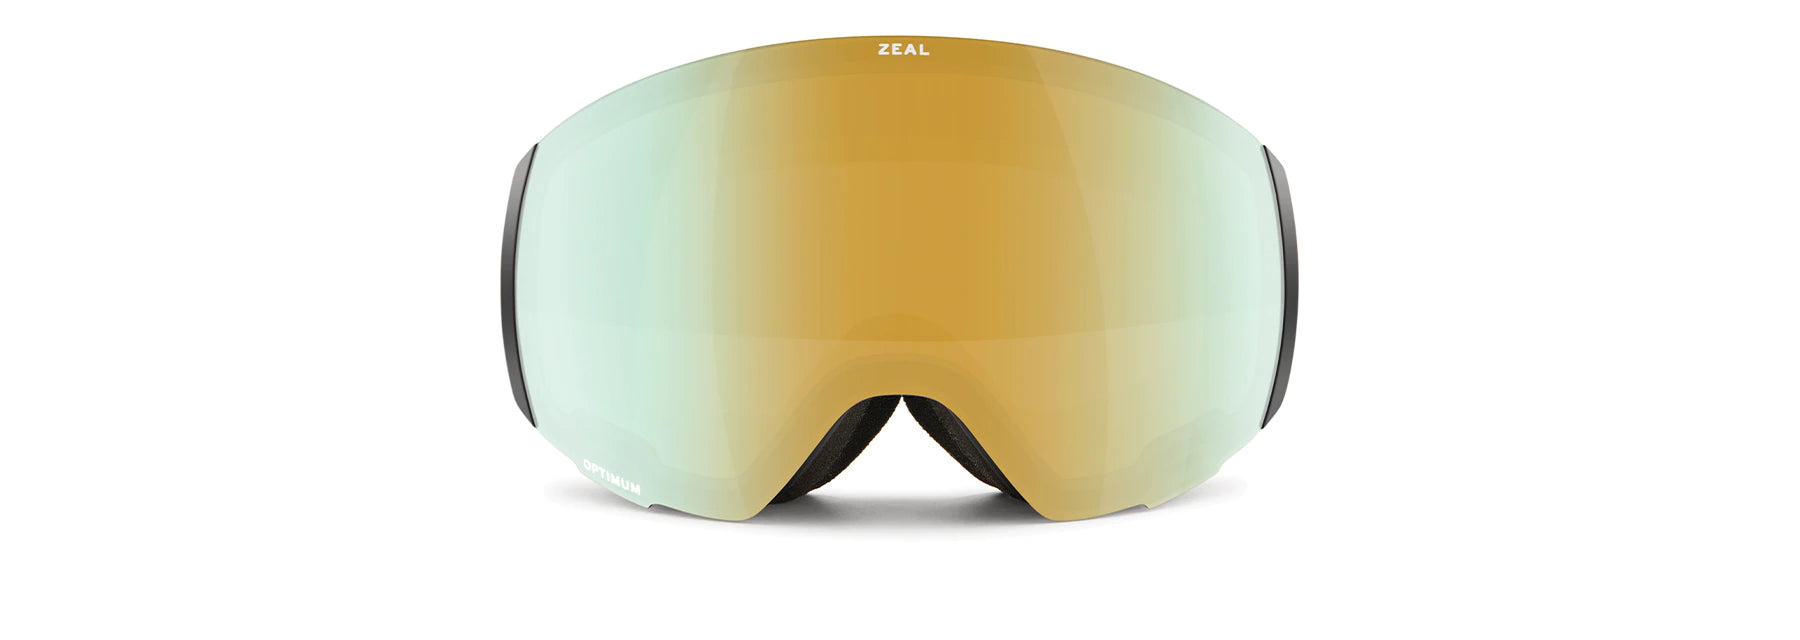 Zeal- Portal Asian Fit RLS Ski & Snowboard Goggles w/ Bonus Lens